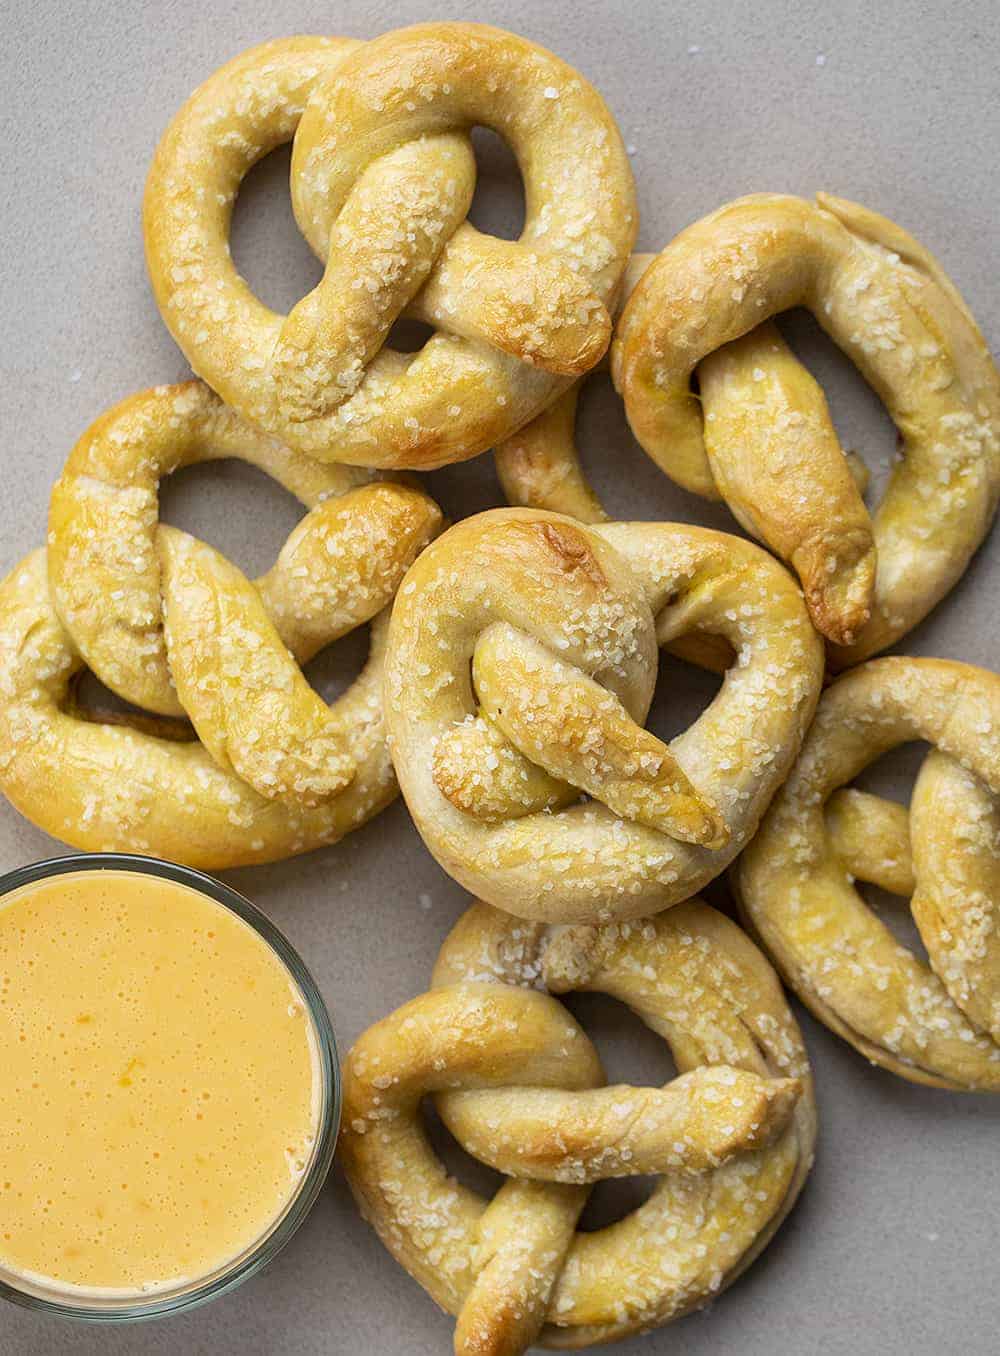 https://iambaker.net/wp-content/uploads/2020/04/pretzels-2.jpg